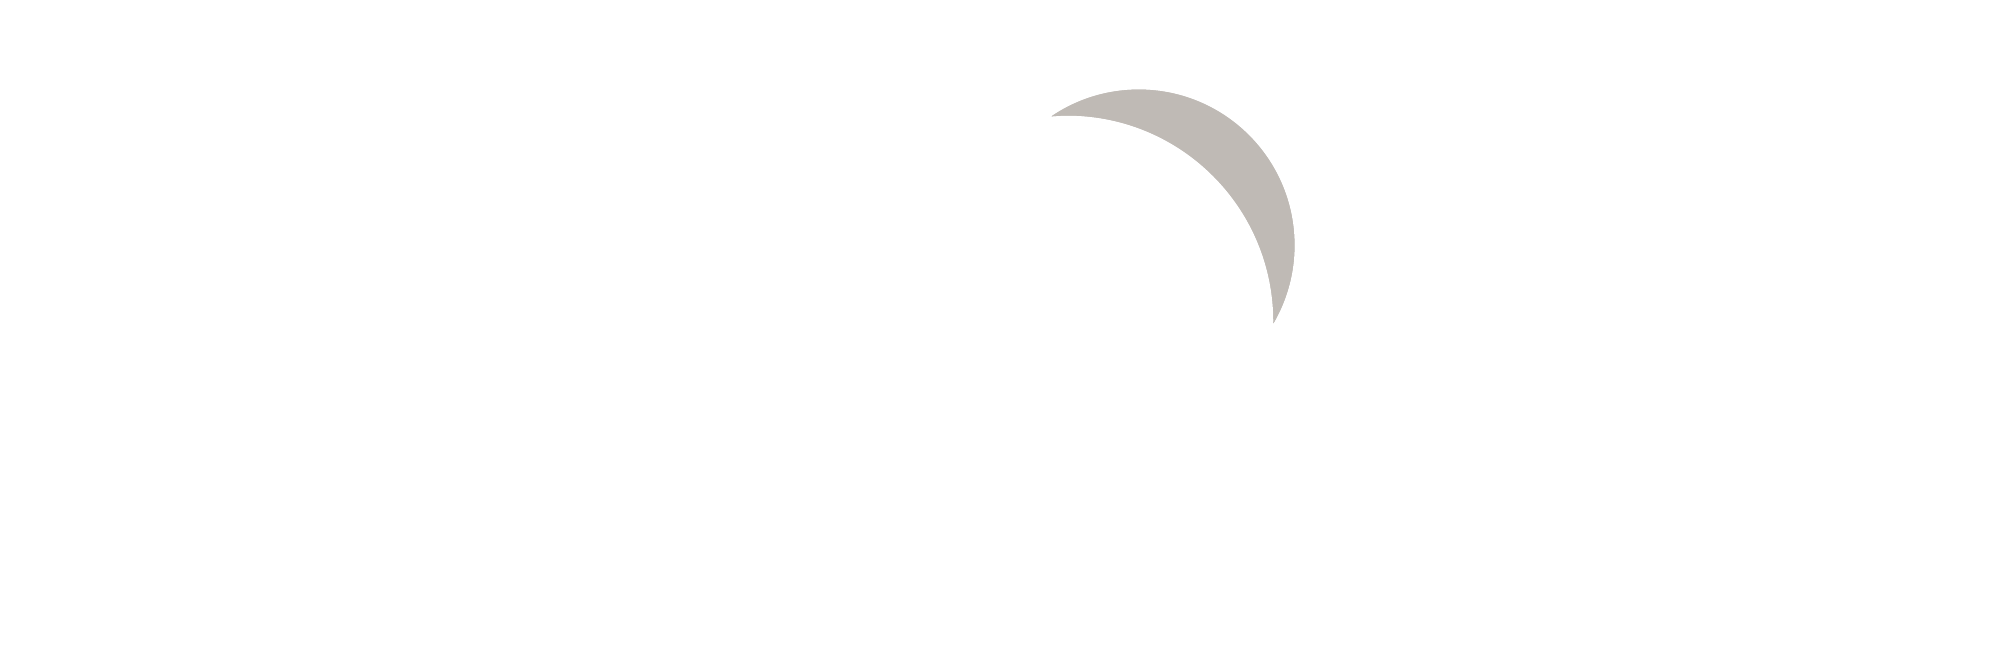 Elhuyar logo